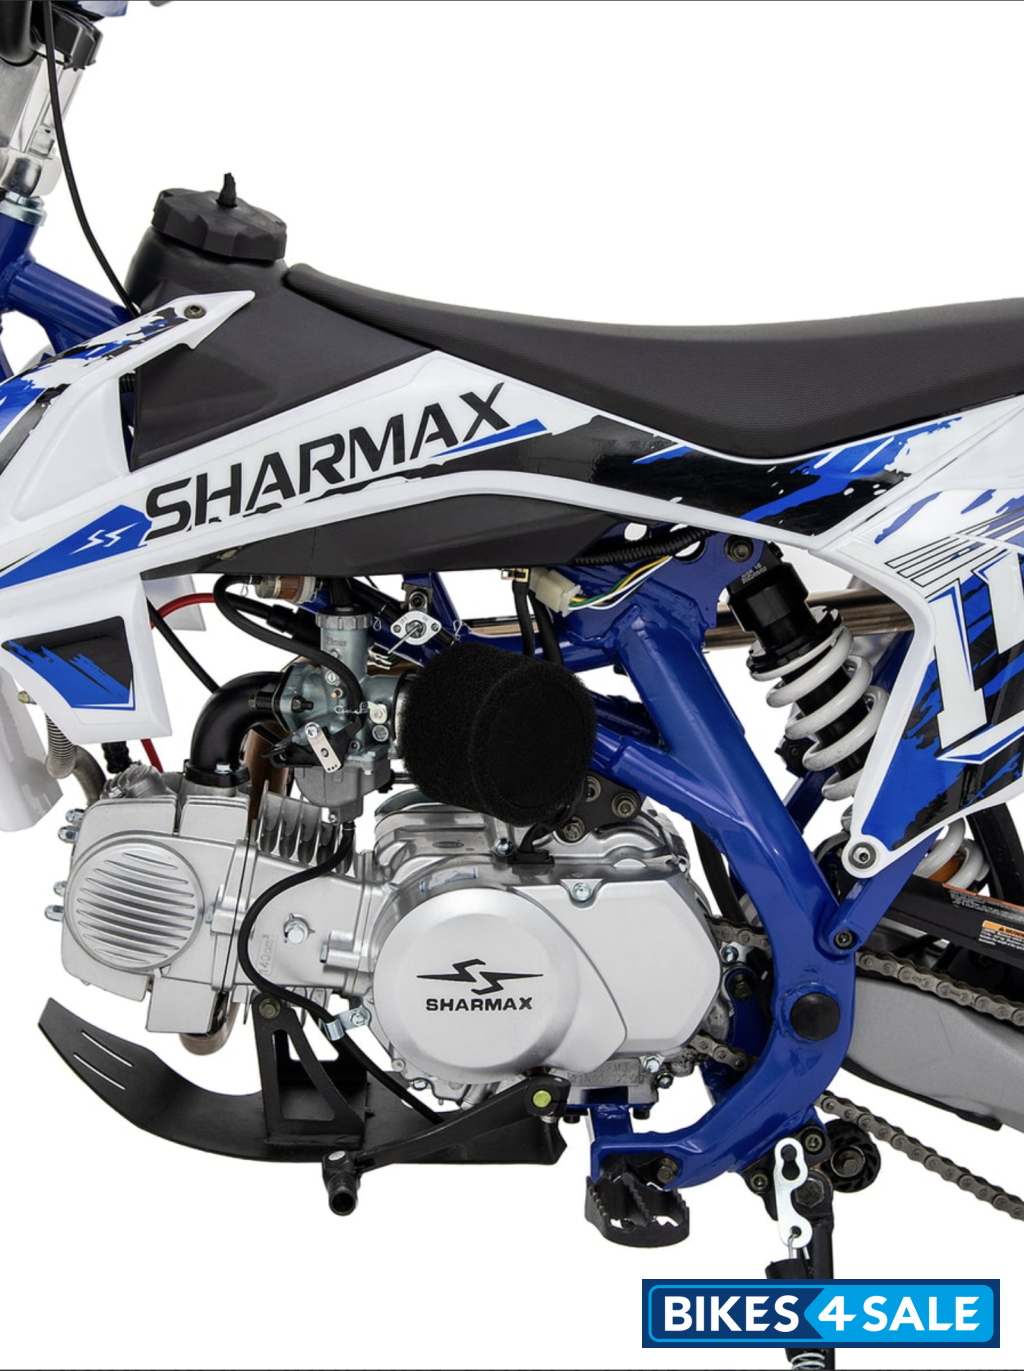 SHARMAX MOTORCYCLE Sharmax Power Max 145